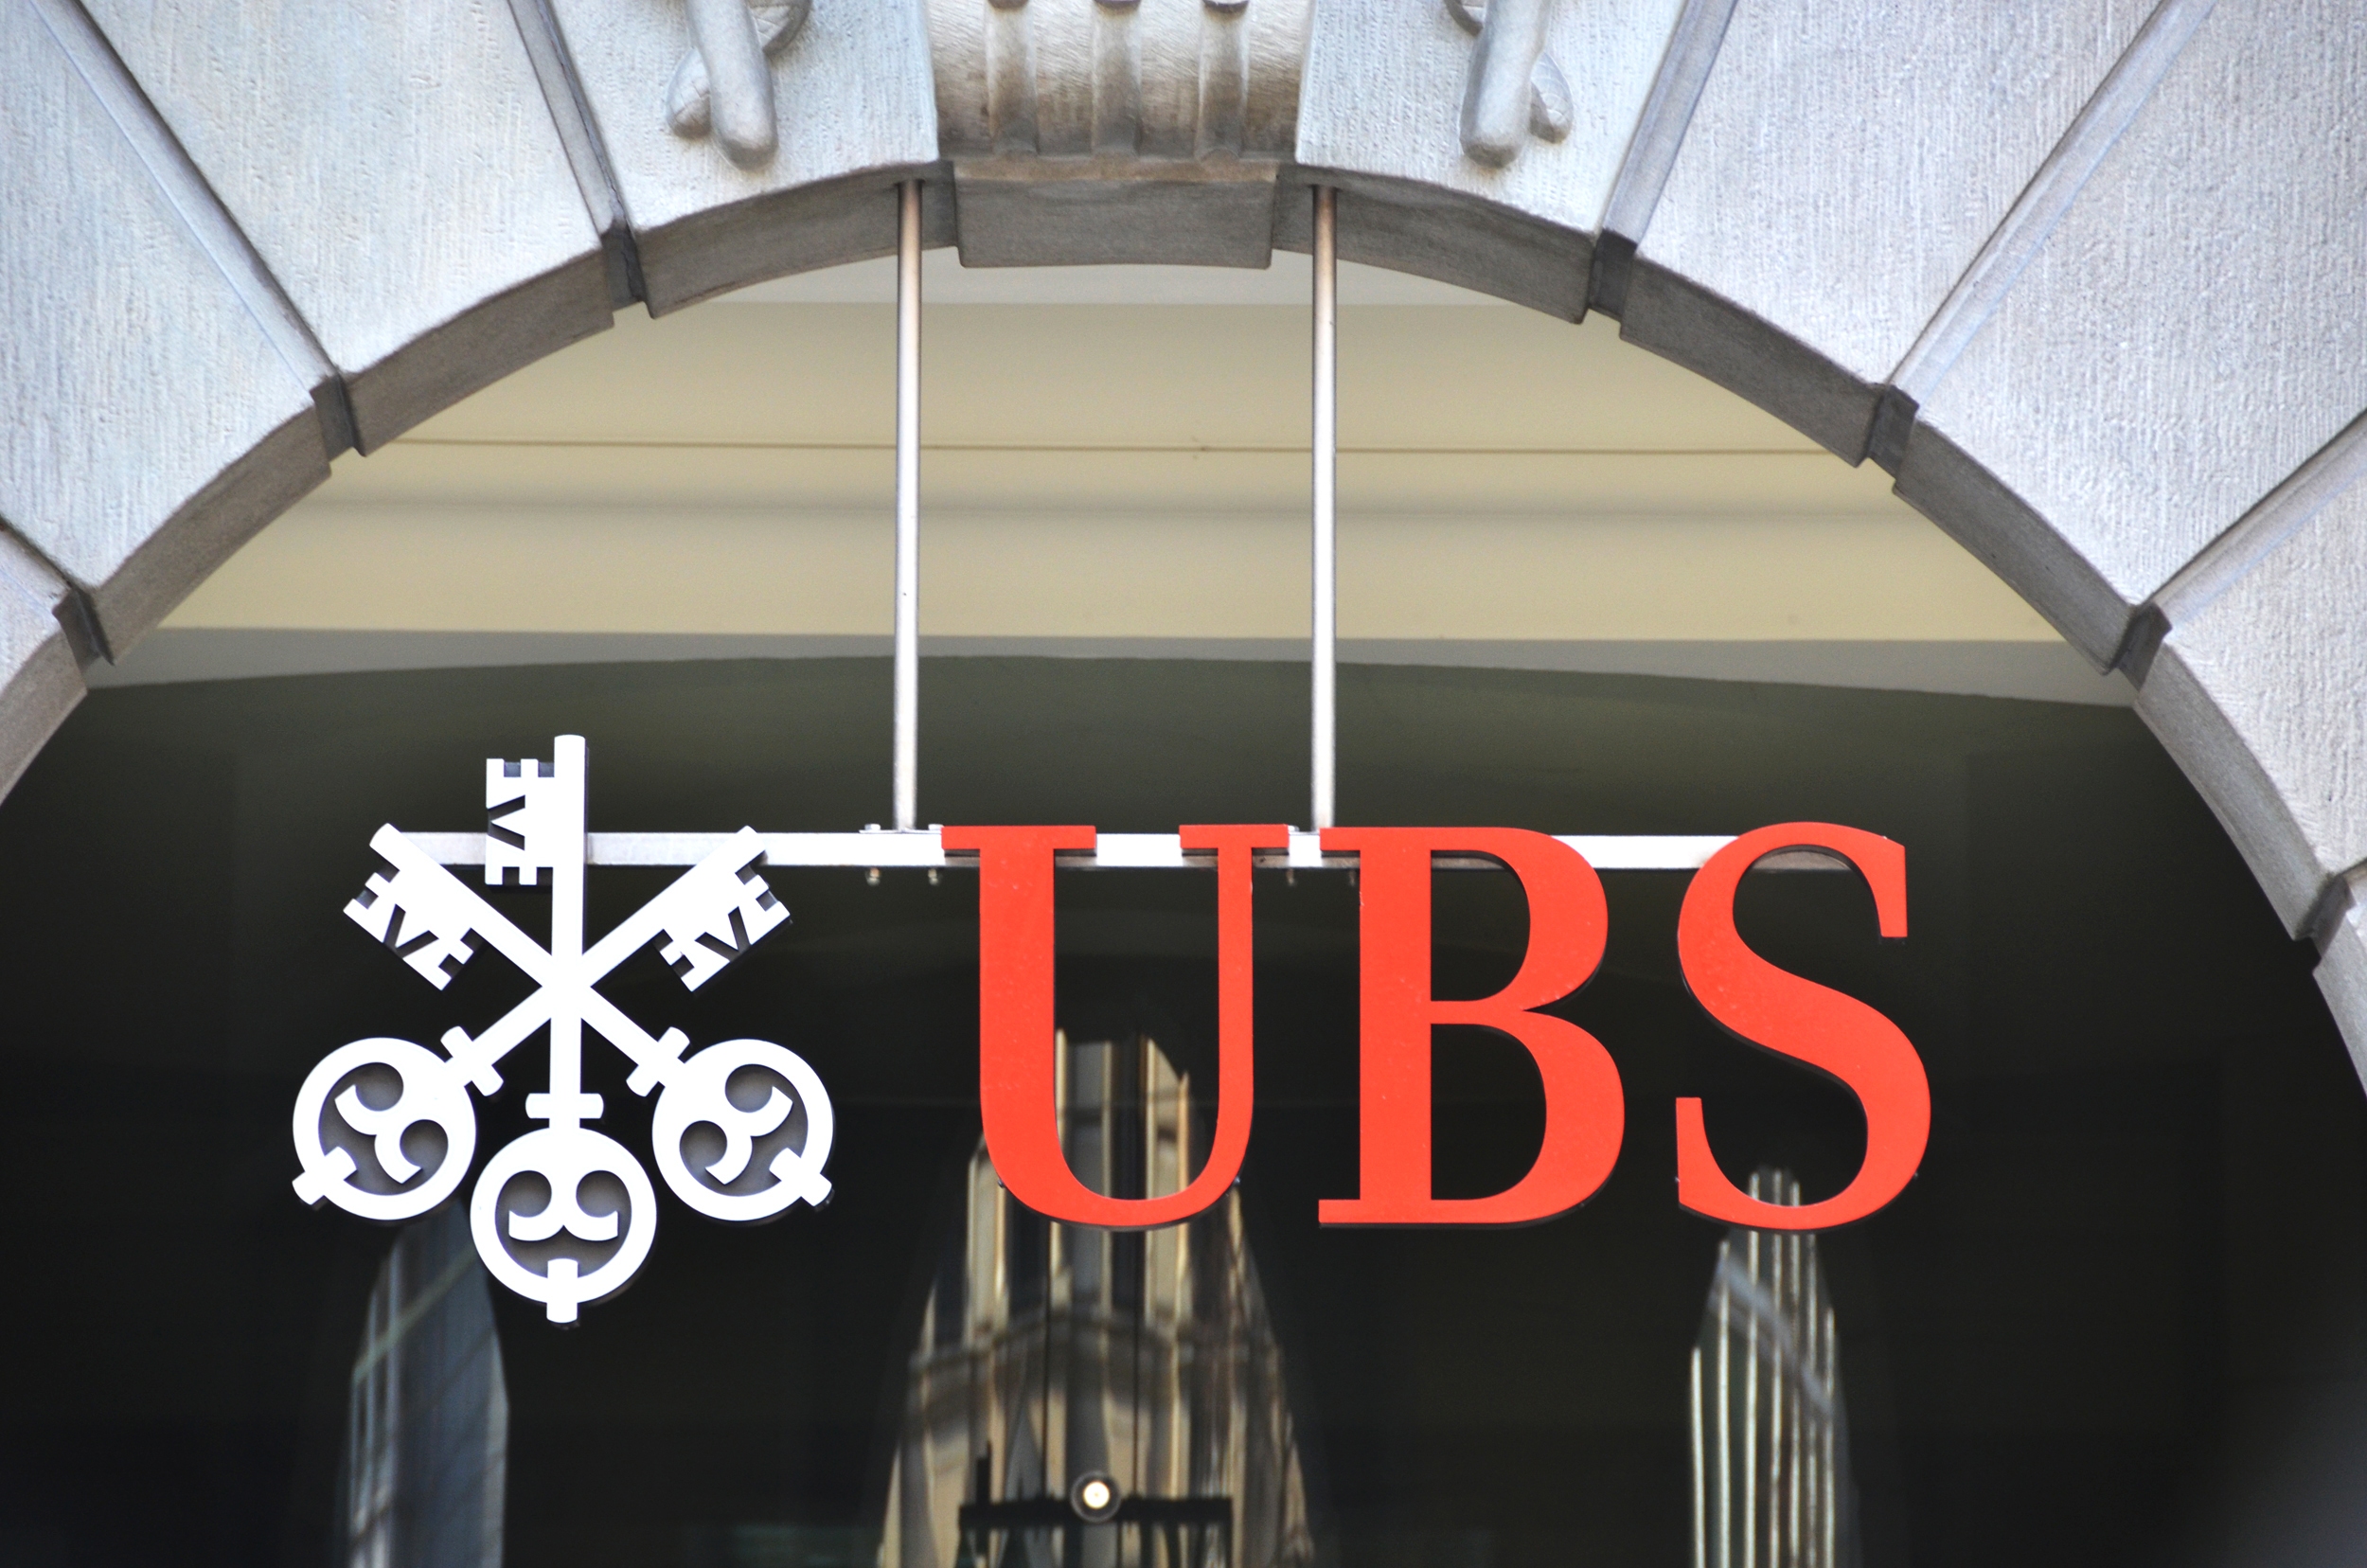 Банку ubs. Швейцарский банк. Банк Швейцарии. Банковская система Швейцарии. UBS банк.